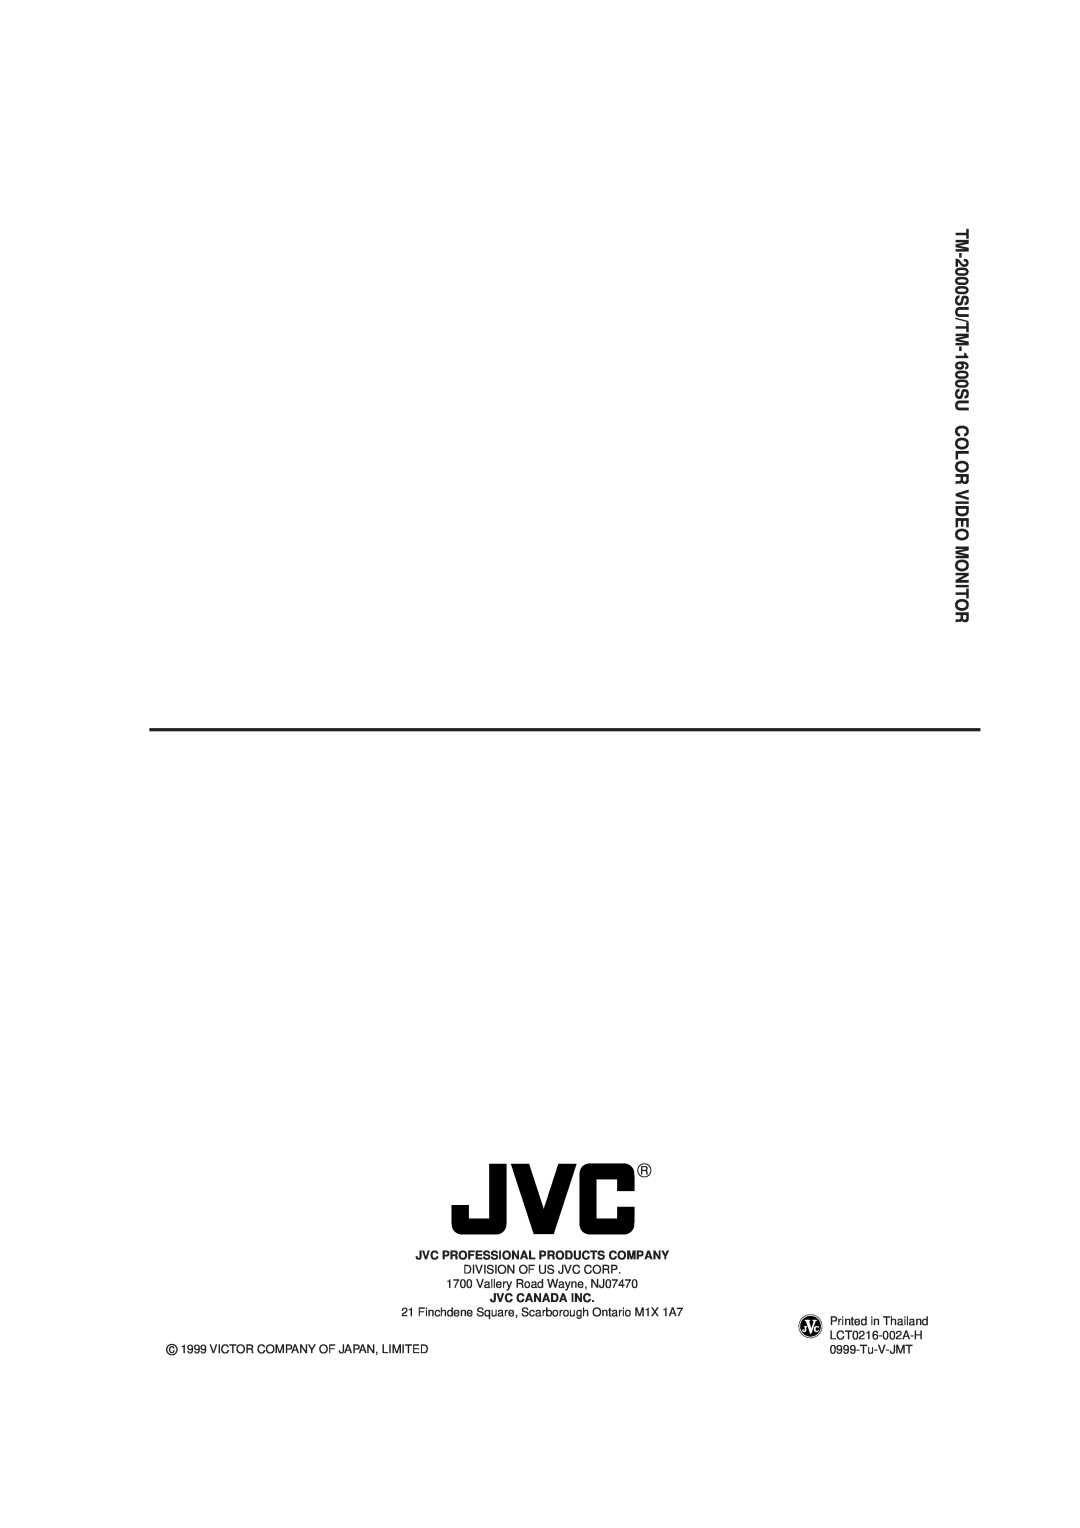 JVC manual TM-2000SU/TM-1600SU COLOR VIDEO MONITOR, Jvc Professional Products Company, Jvc Canada Inc 